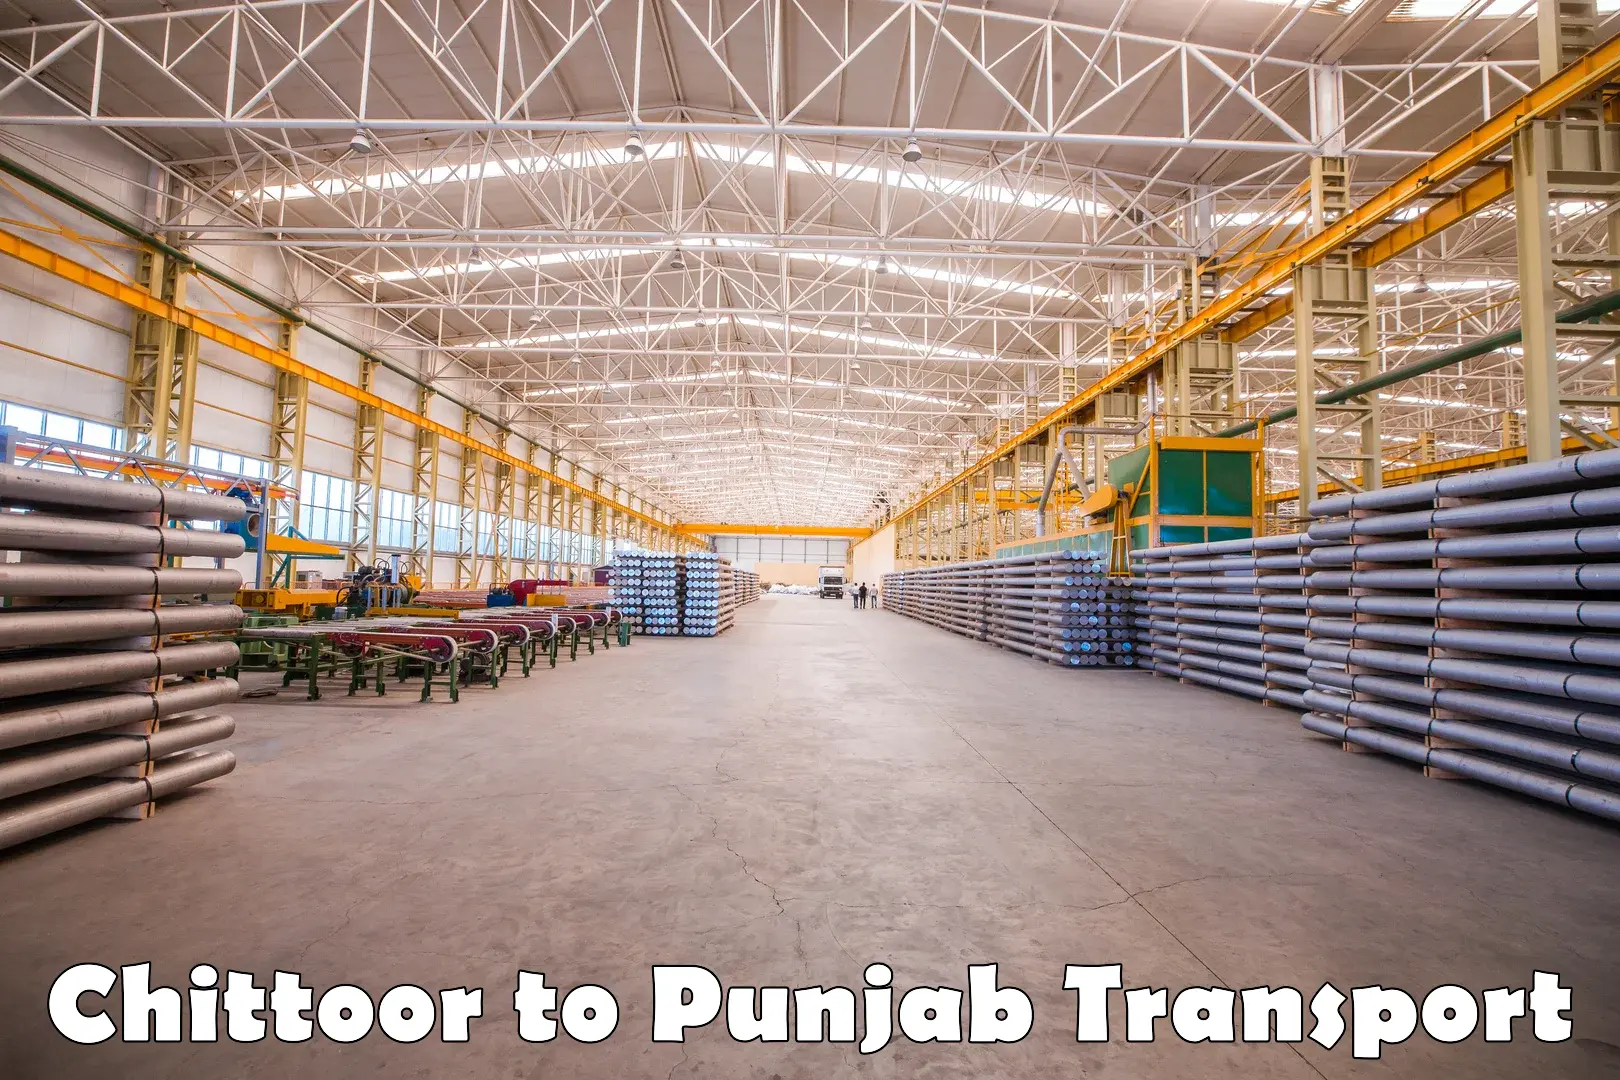 Online transport service Chittoor to Punjab